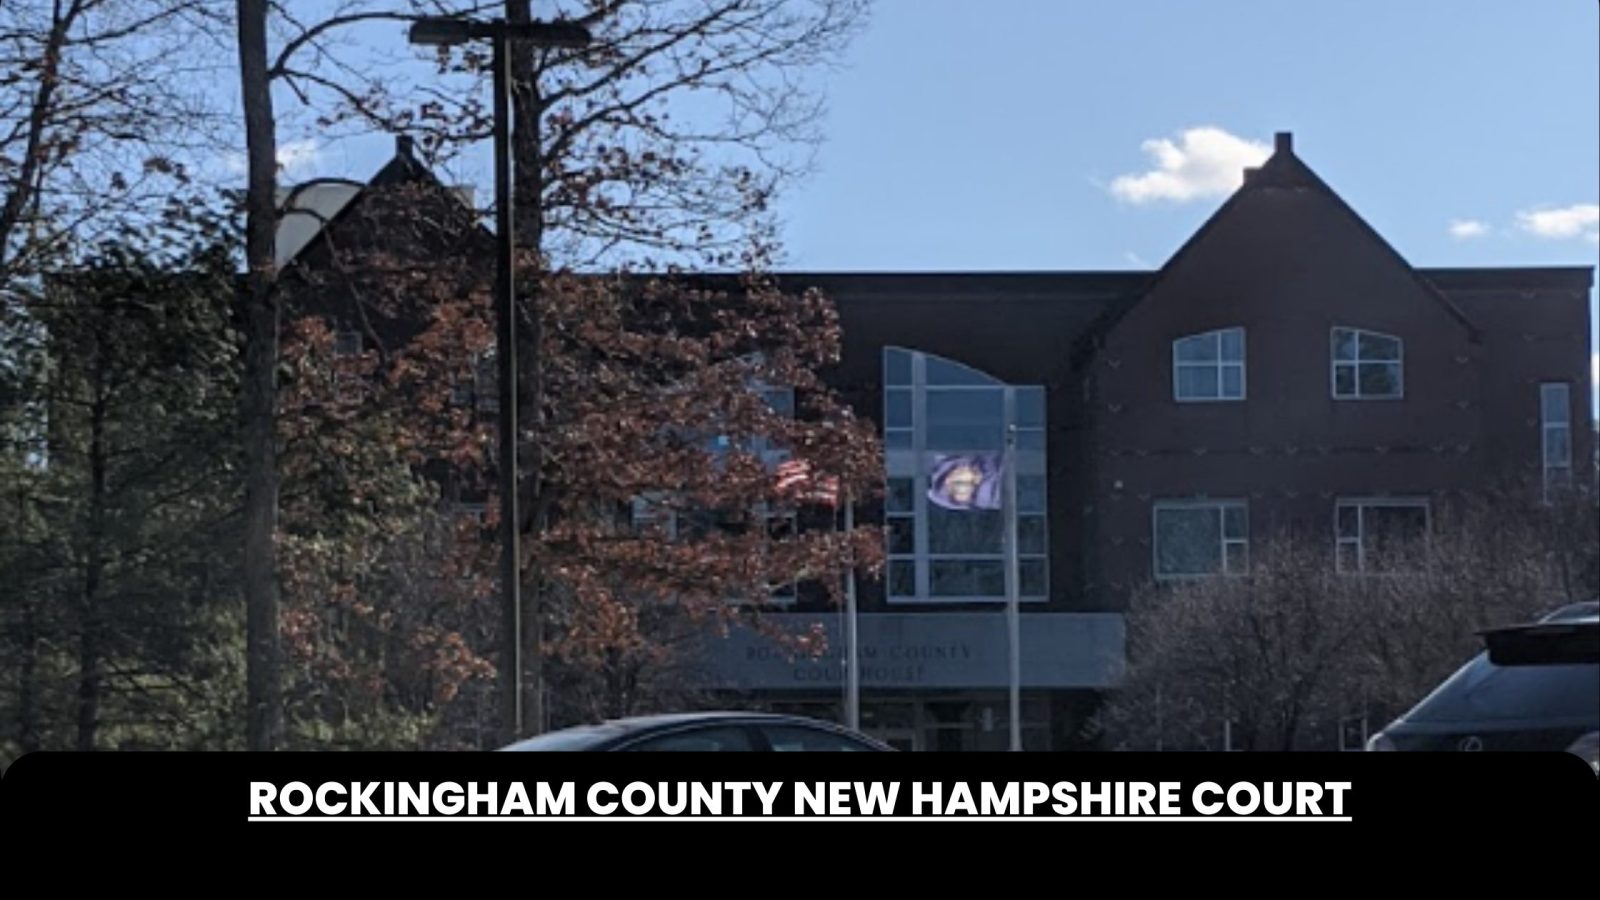 Rockingham County New Hampshire Court